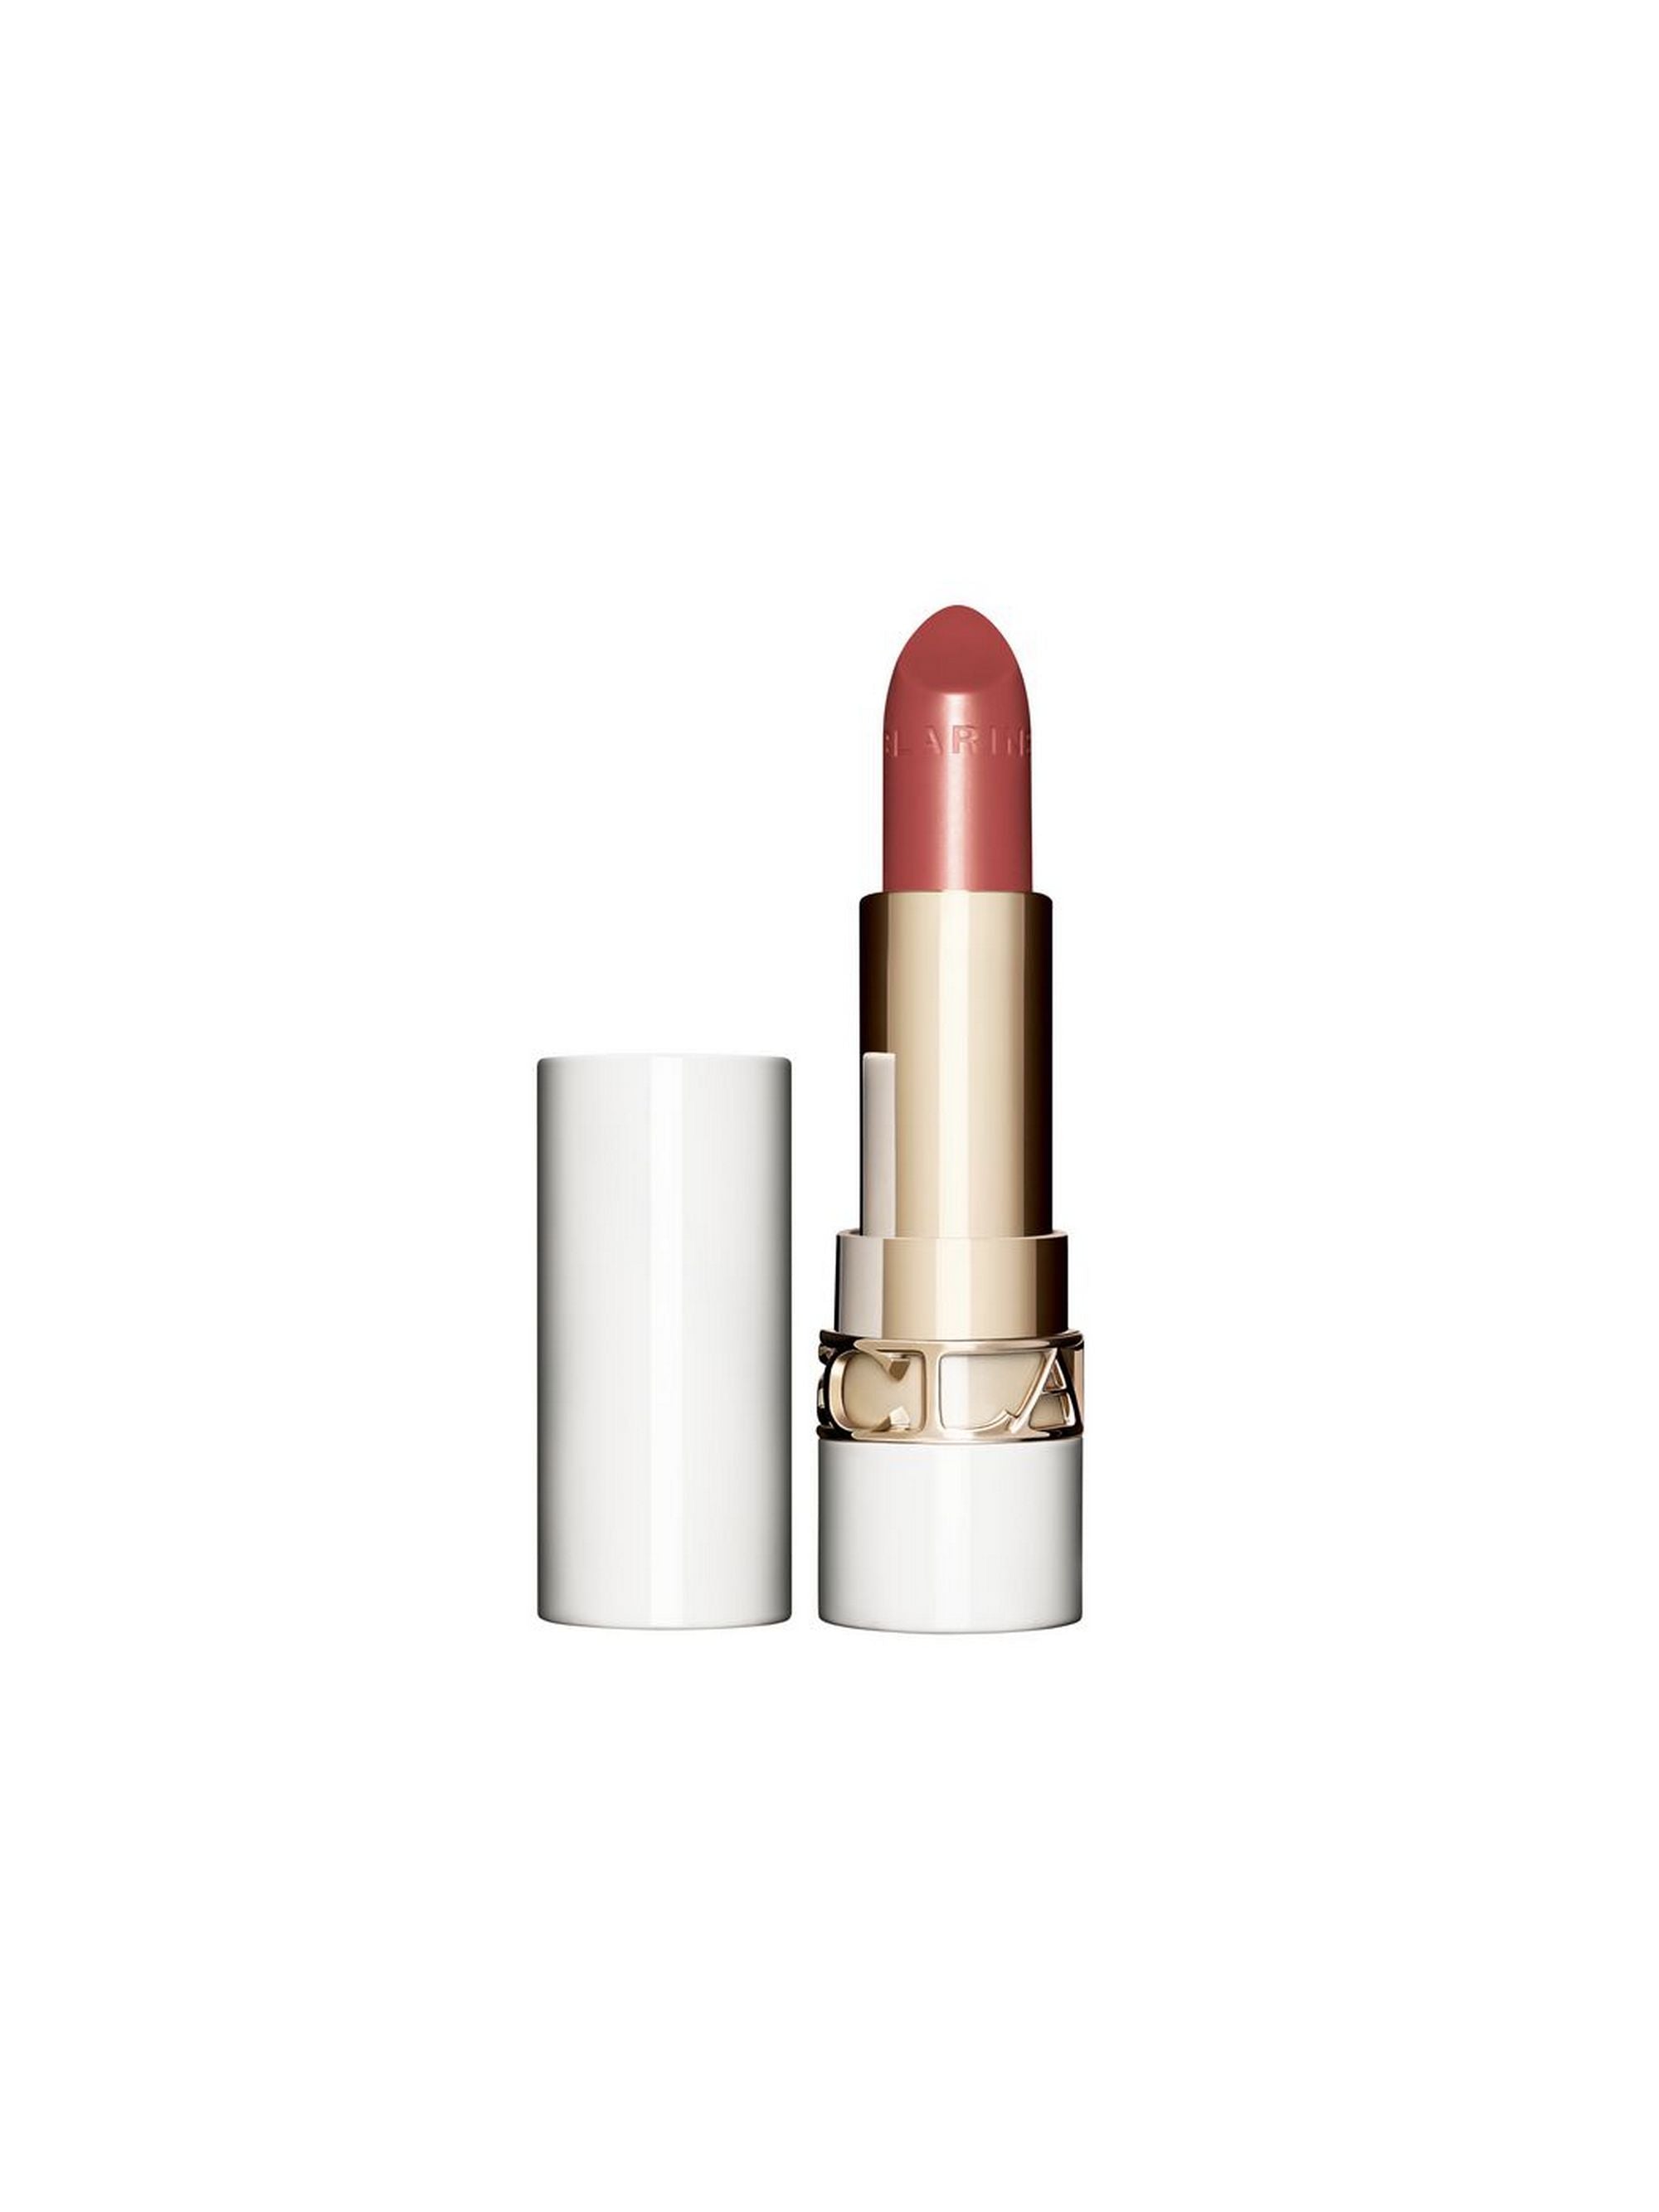 Clarins Joli Rouge Brilliant Lipstick